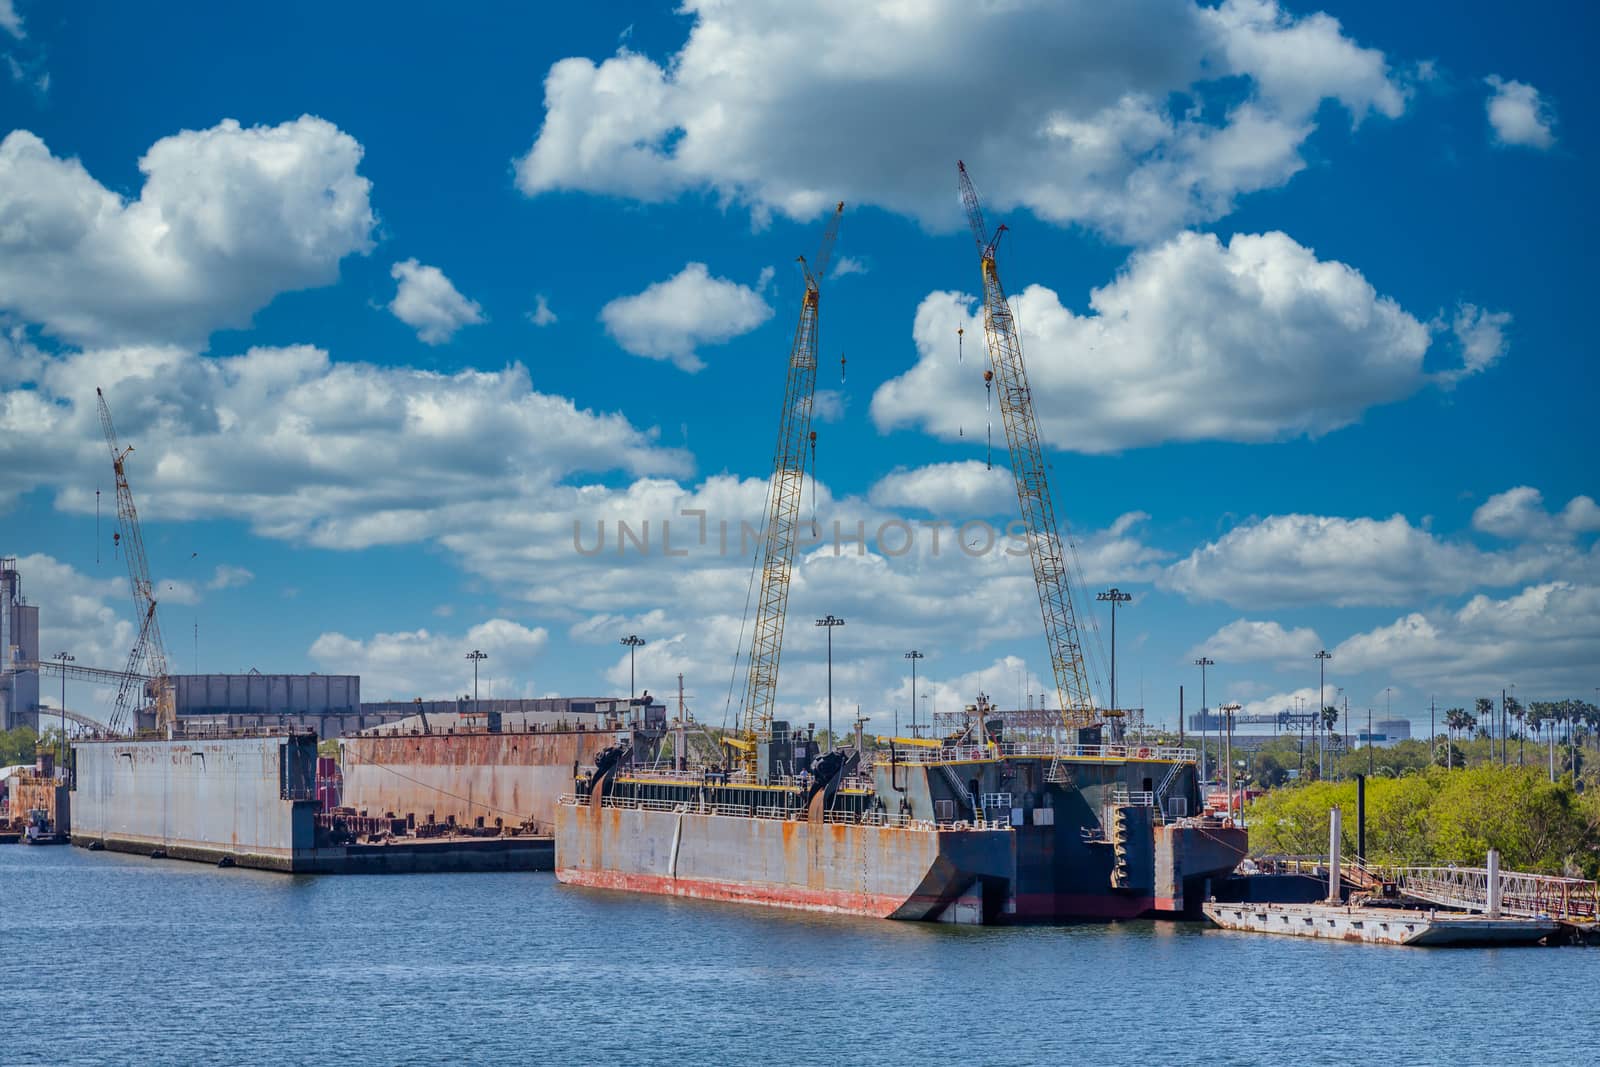 Construction cranes at a dry dock and shipyard